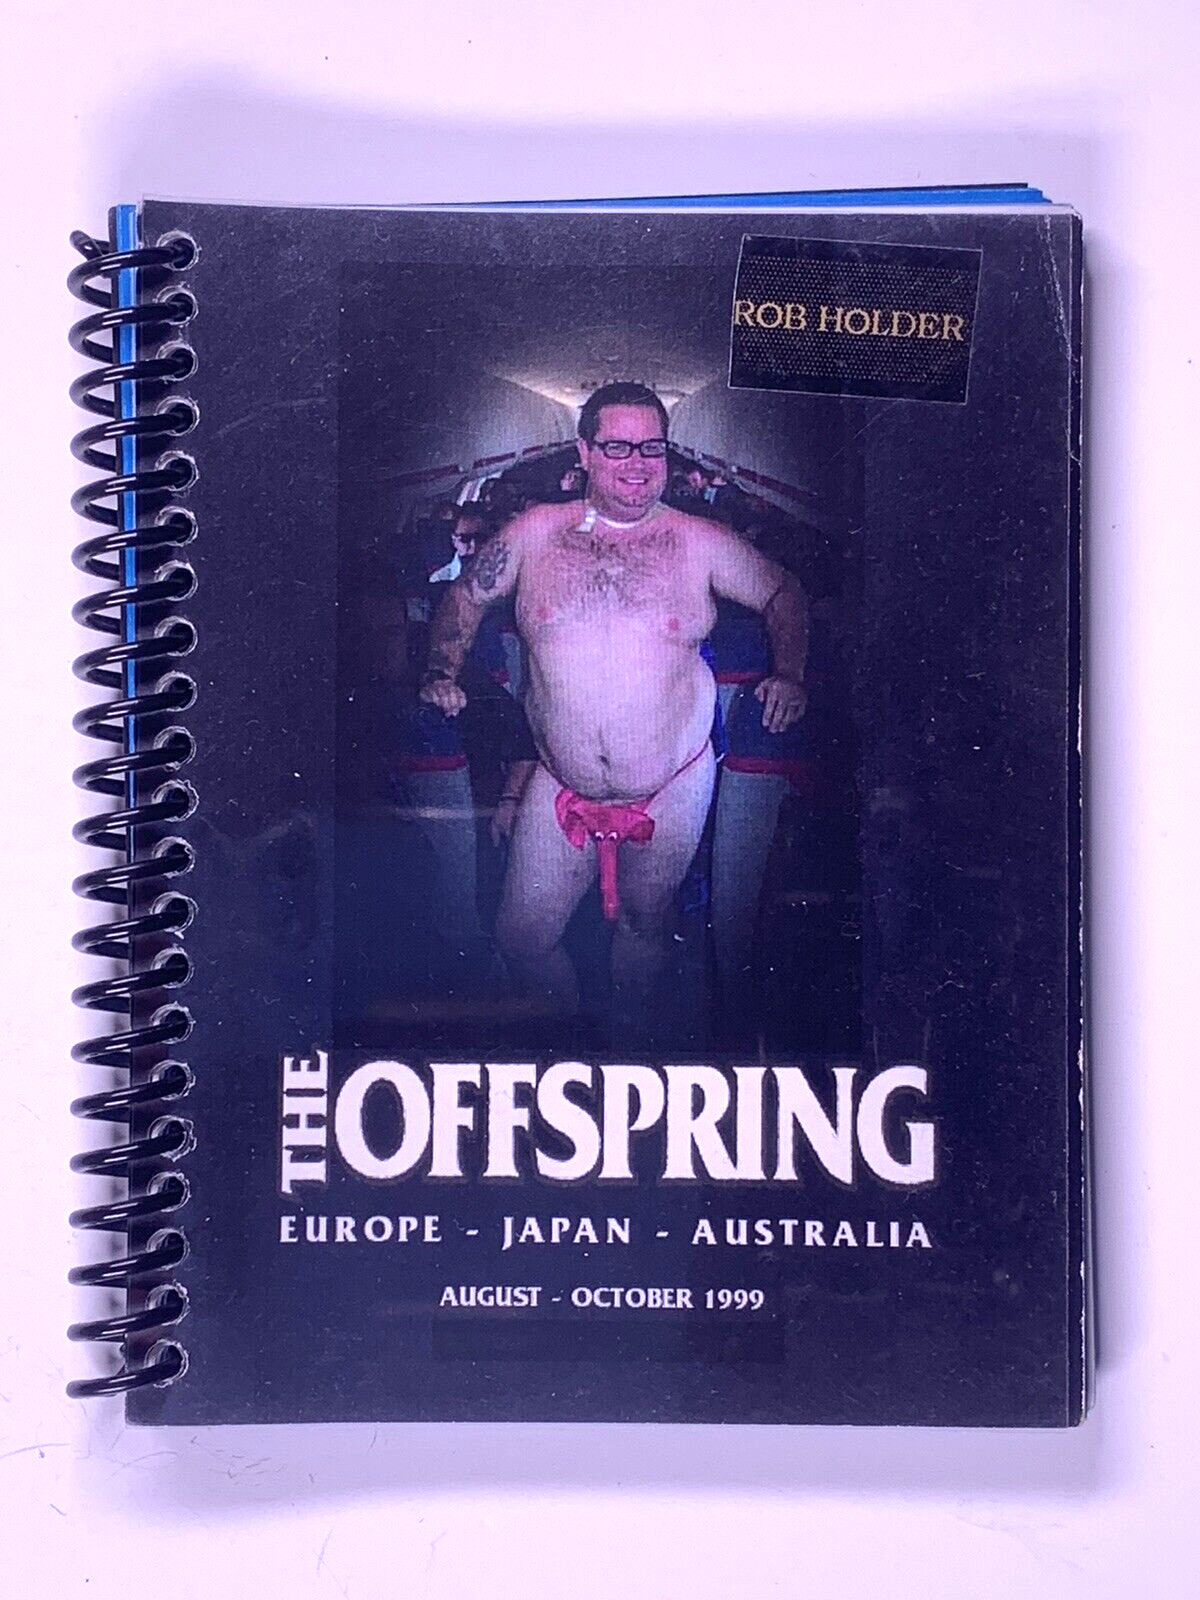 The Offspring Itinerary Original Used Europe Japan Australia Tour Aug-Oct 99